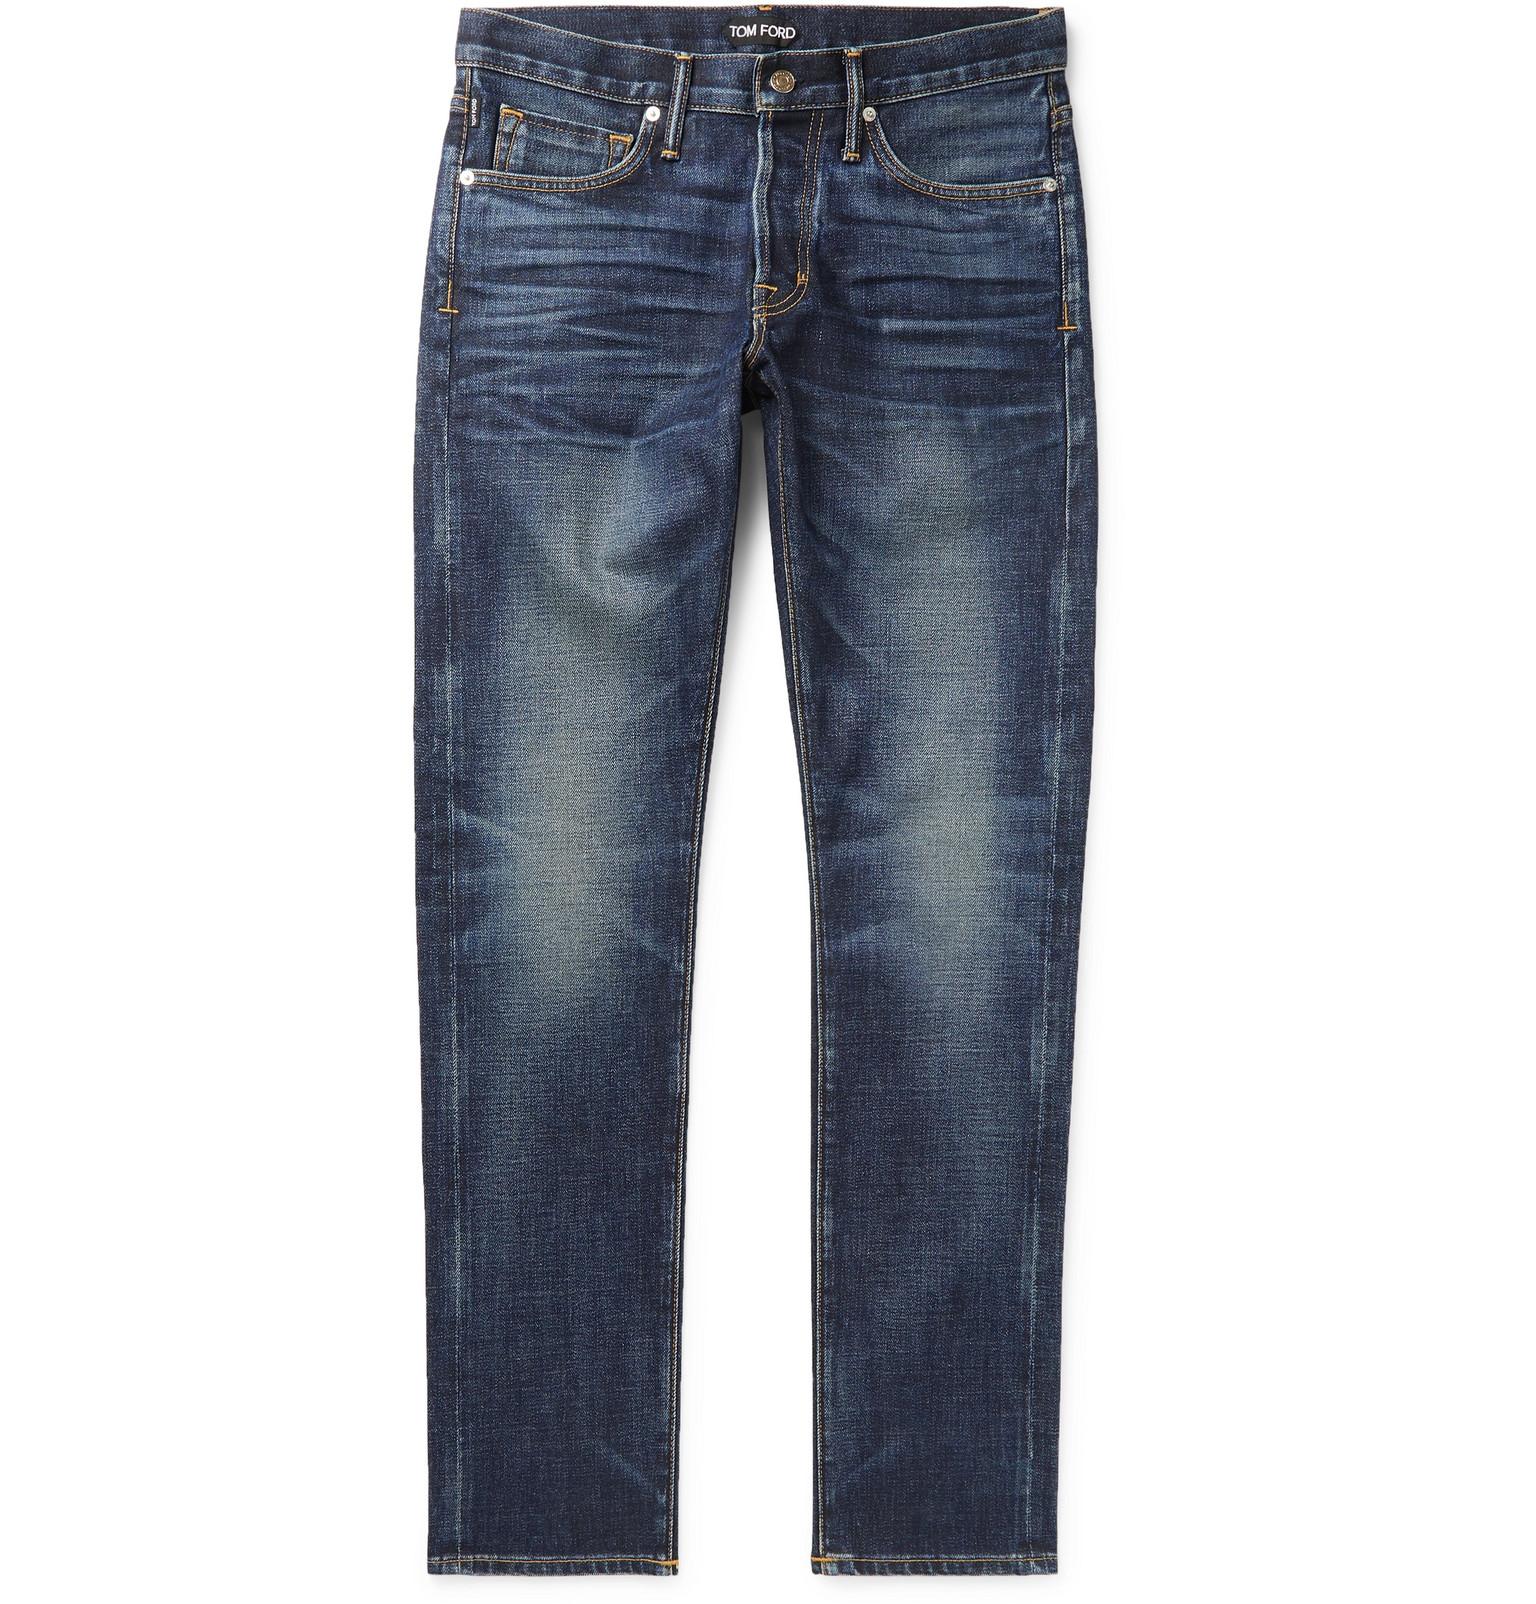 Tom Ford Slim-fit Denim Jeans in Blue for Men - Lyst